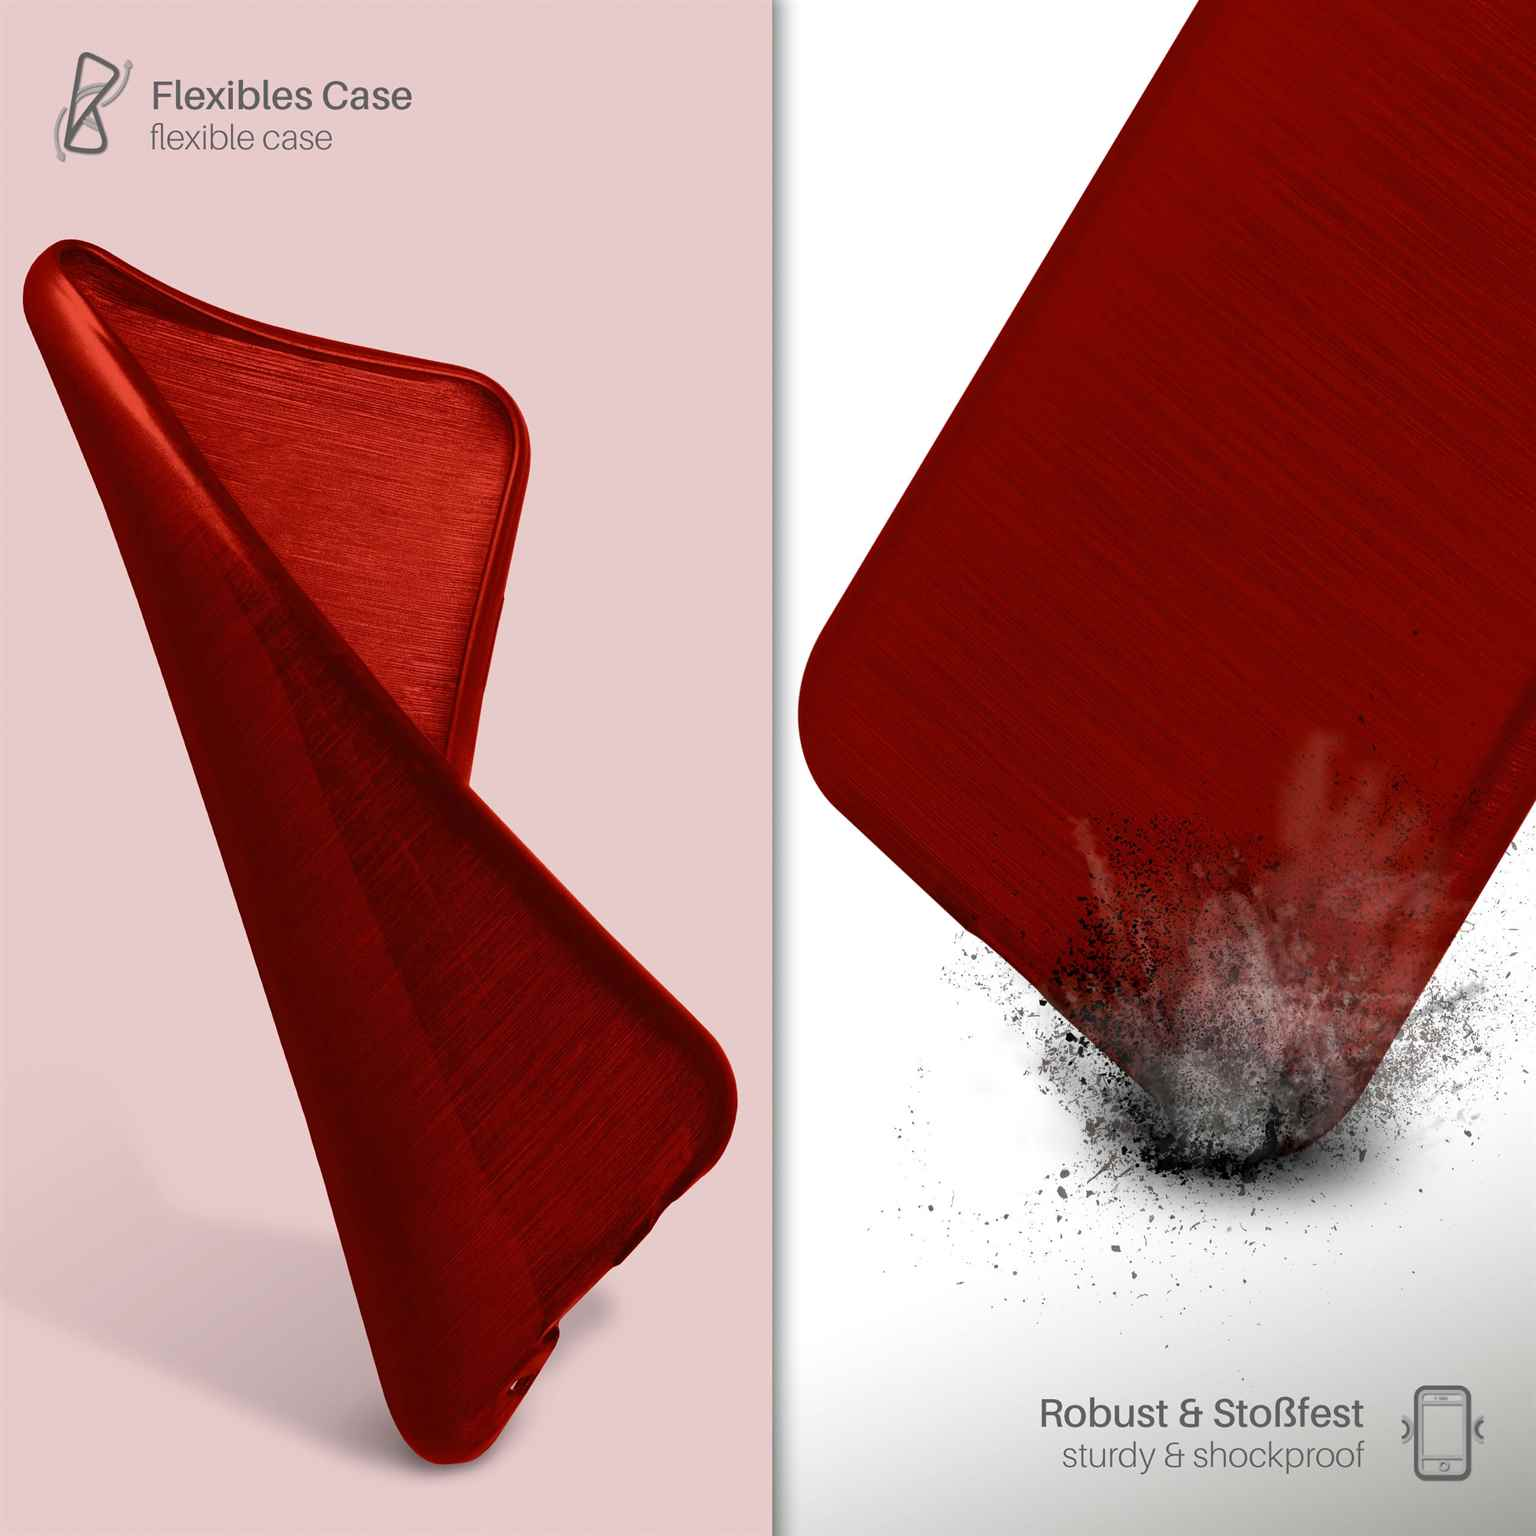 Backcover, 2. Case, SE Brushed Crimson-Red iPhone Generation (2020), MOEX Apple,